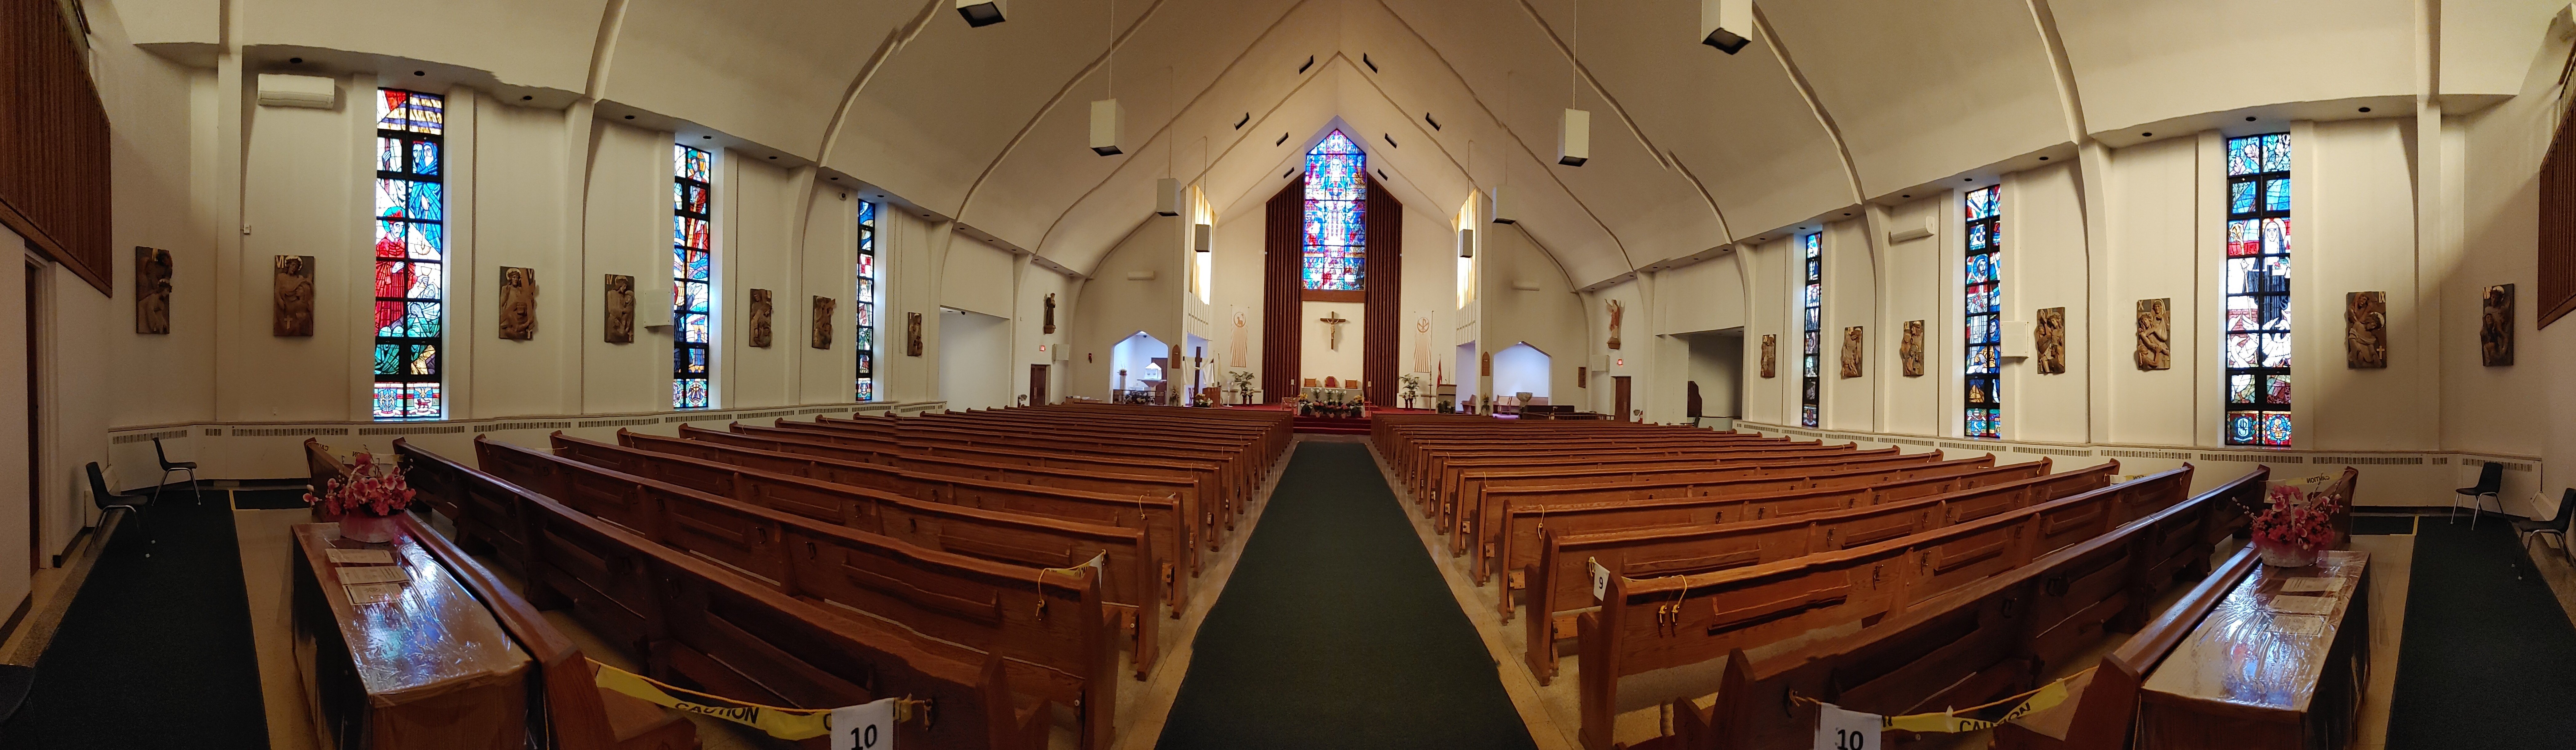 Church interior in panoramic view